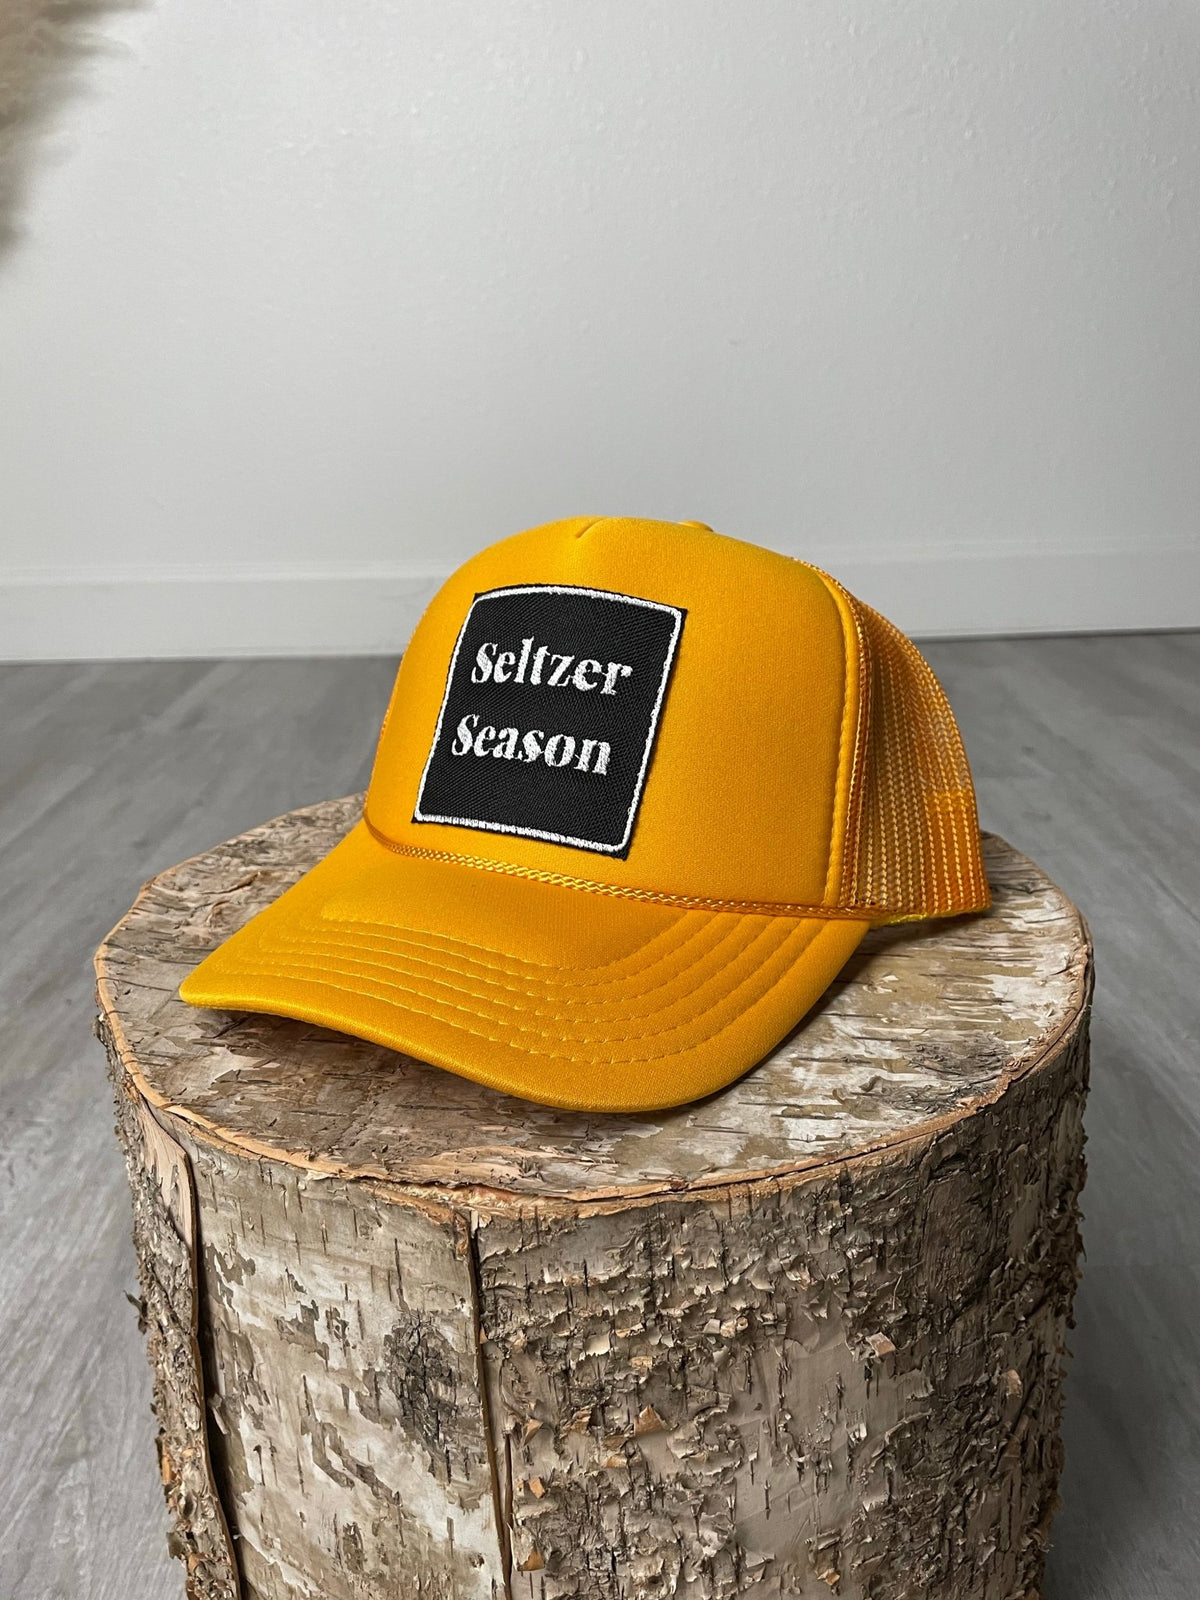 Seltzer season hat mustard - Trendy Hats at Lush Fashion Lounge Boutique in Oklahoma City